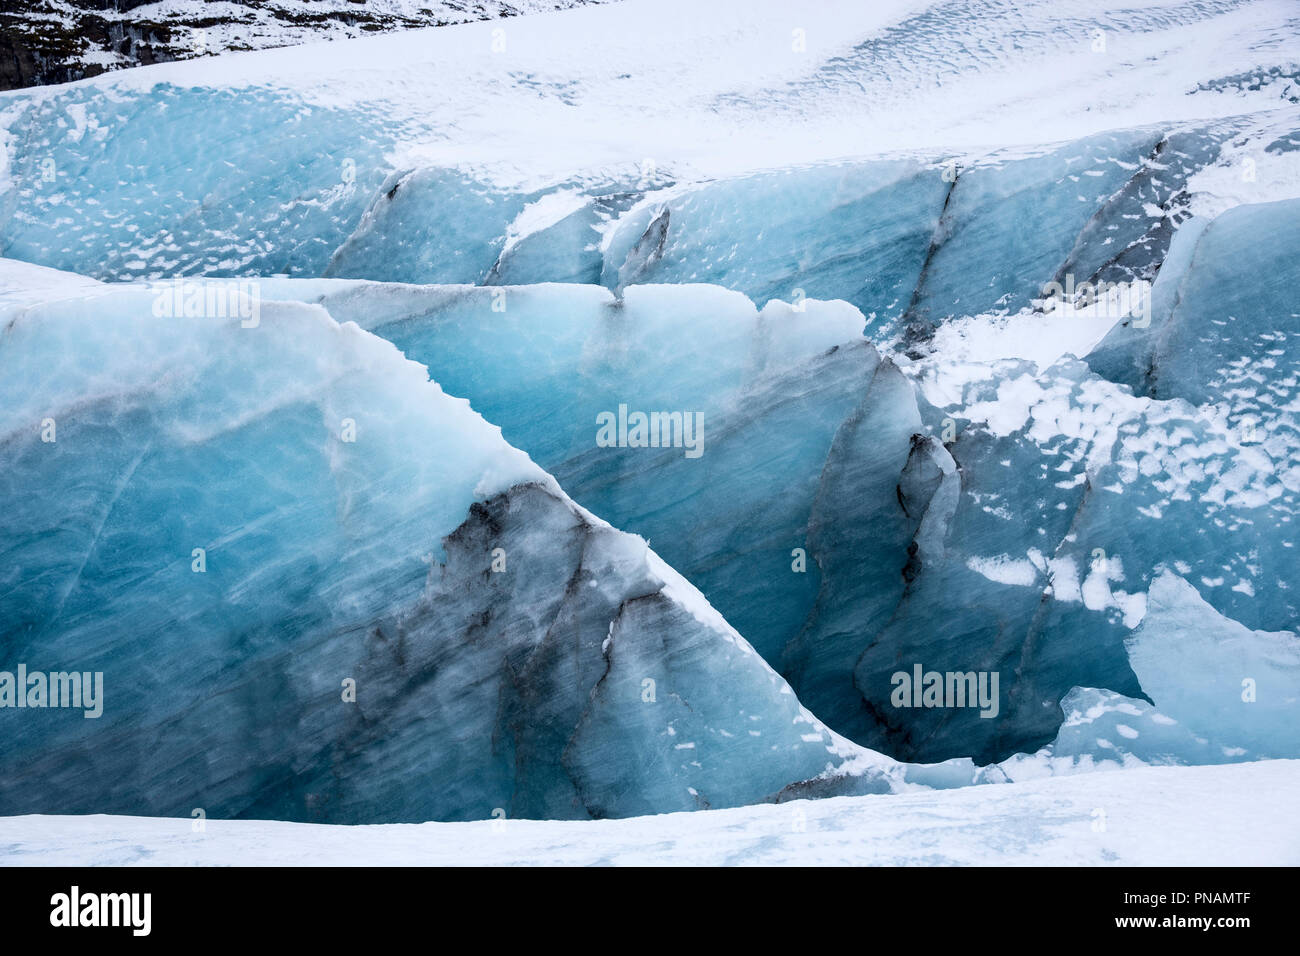 Cerrar mostrando capas de bloques de hielo de los glaciares de la lengua glaciar Svinafellsjokull una salida del glaciar Vatnajokull, en el sur de Islandia Foto de stock